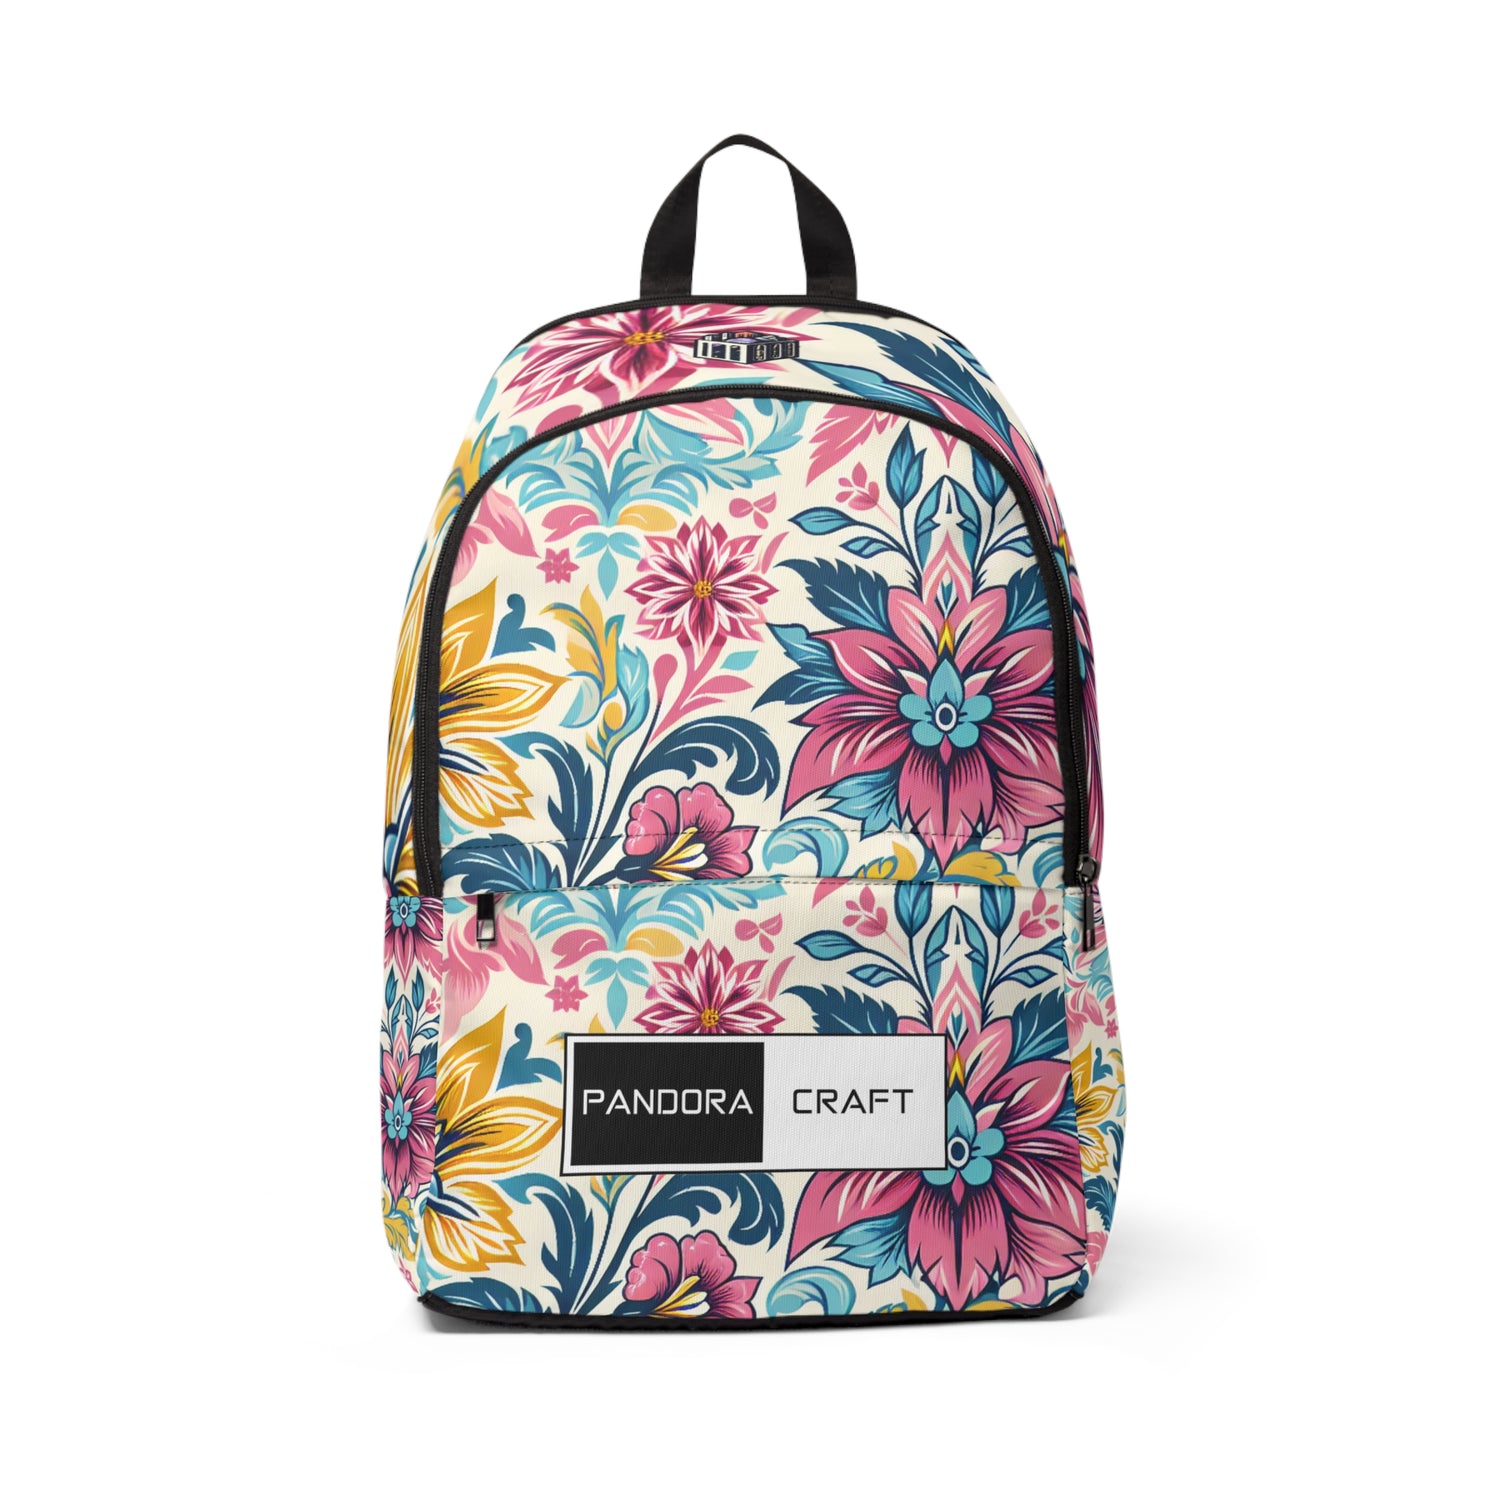 Rosaflor Amazul - Laptop Backpack Rucksack Bag for Men Women, Water Resistant